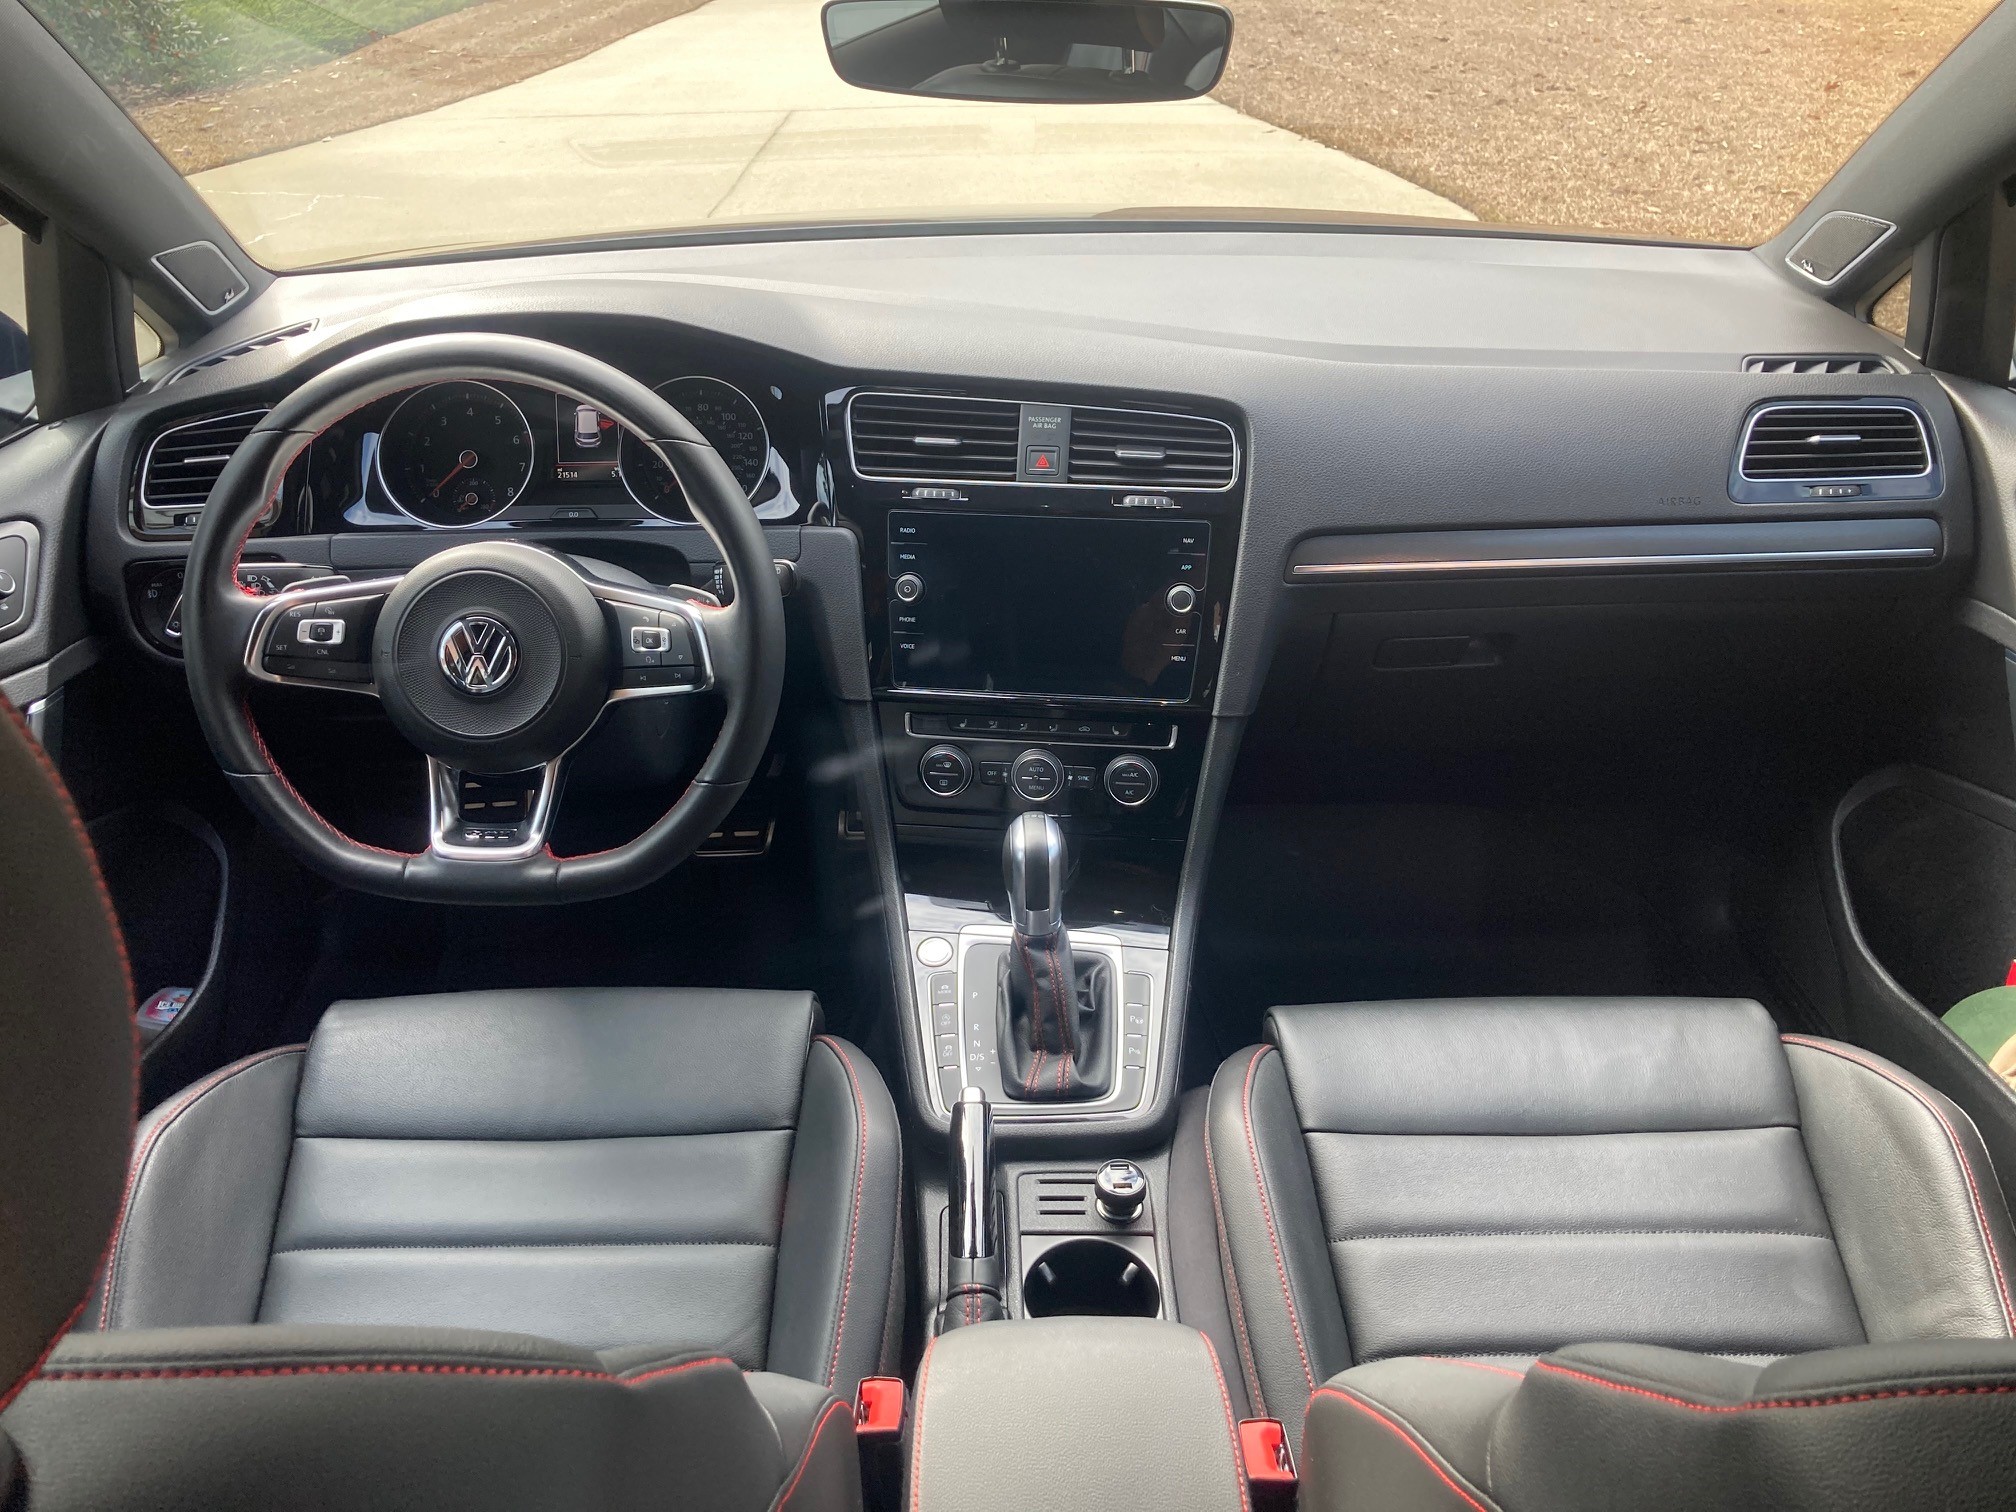 VW Interior Front.jpg